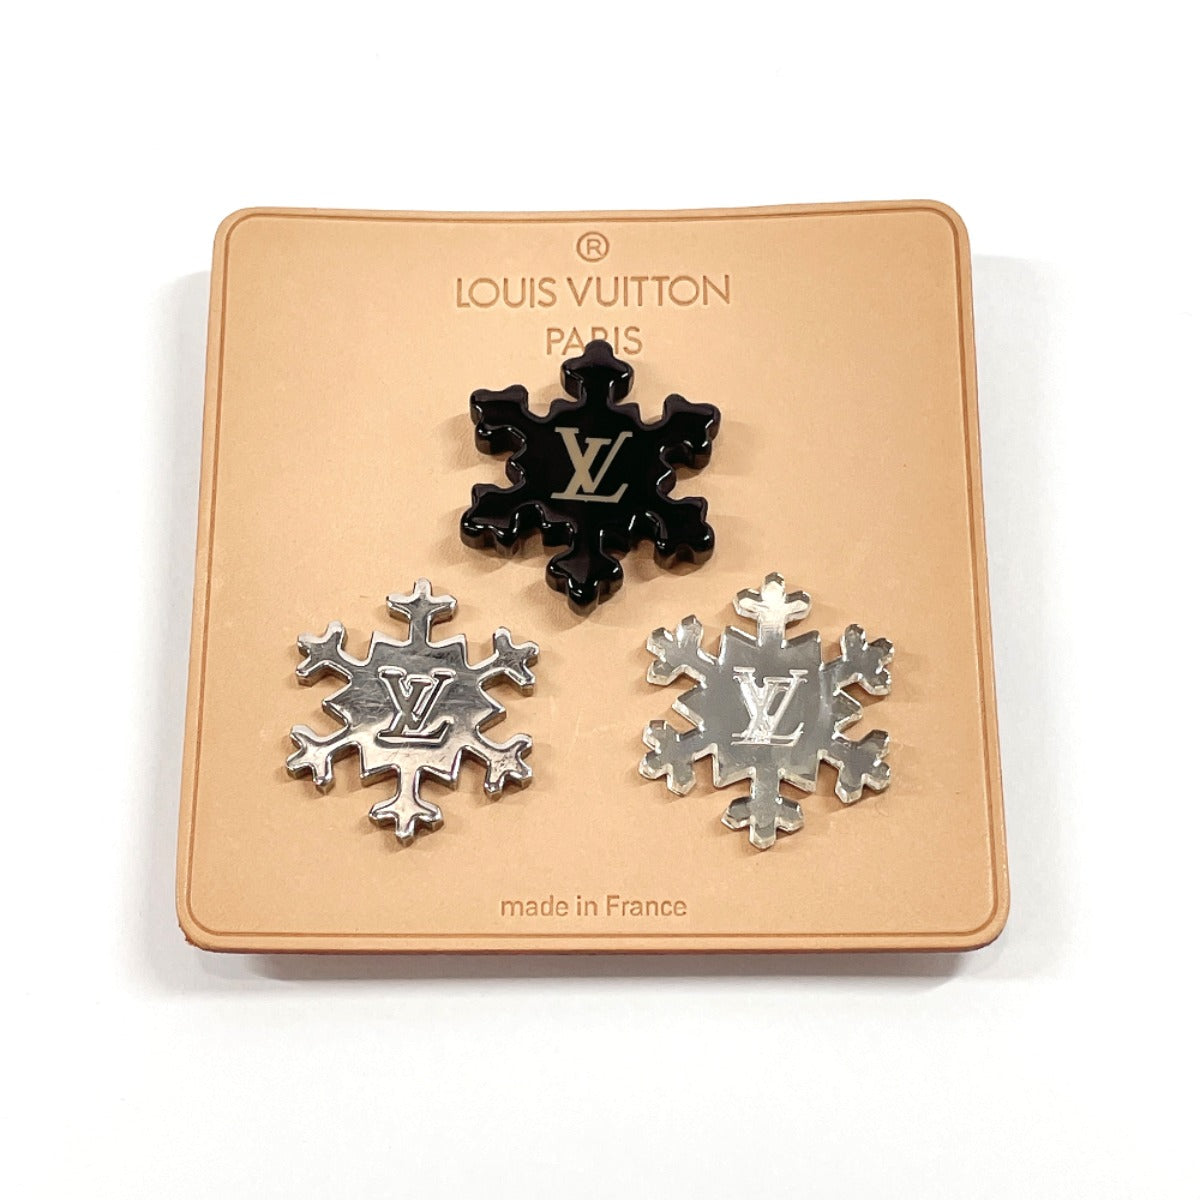 VINTAGE SIZED LOUIS Vuitton LV Brooch, Lapel Pin - Silver $46.00 - PicClick